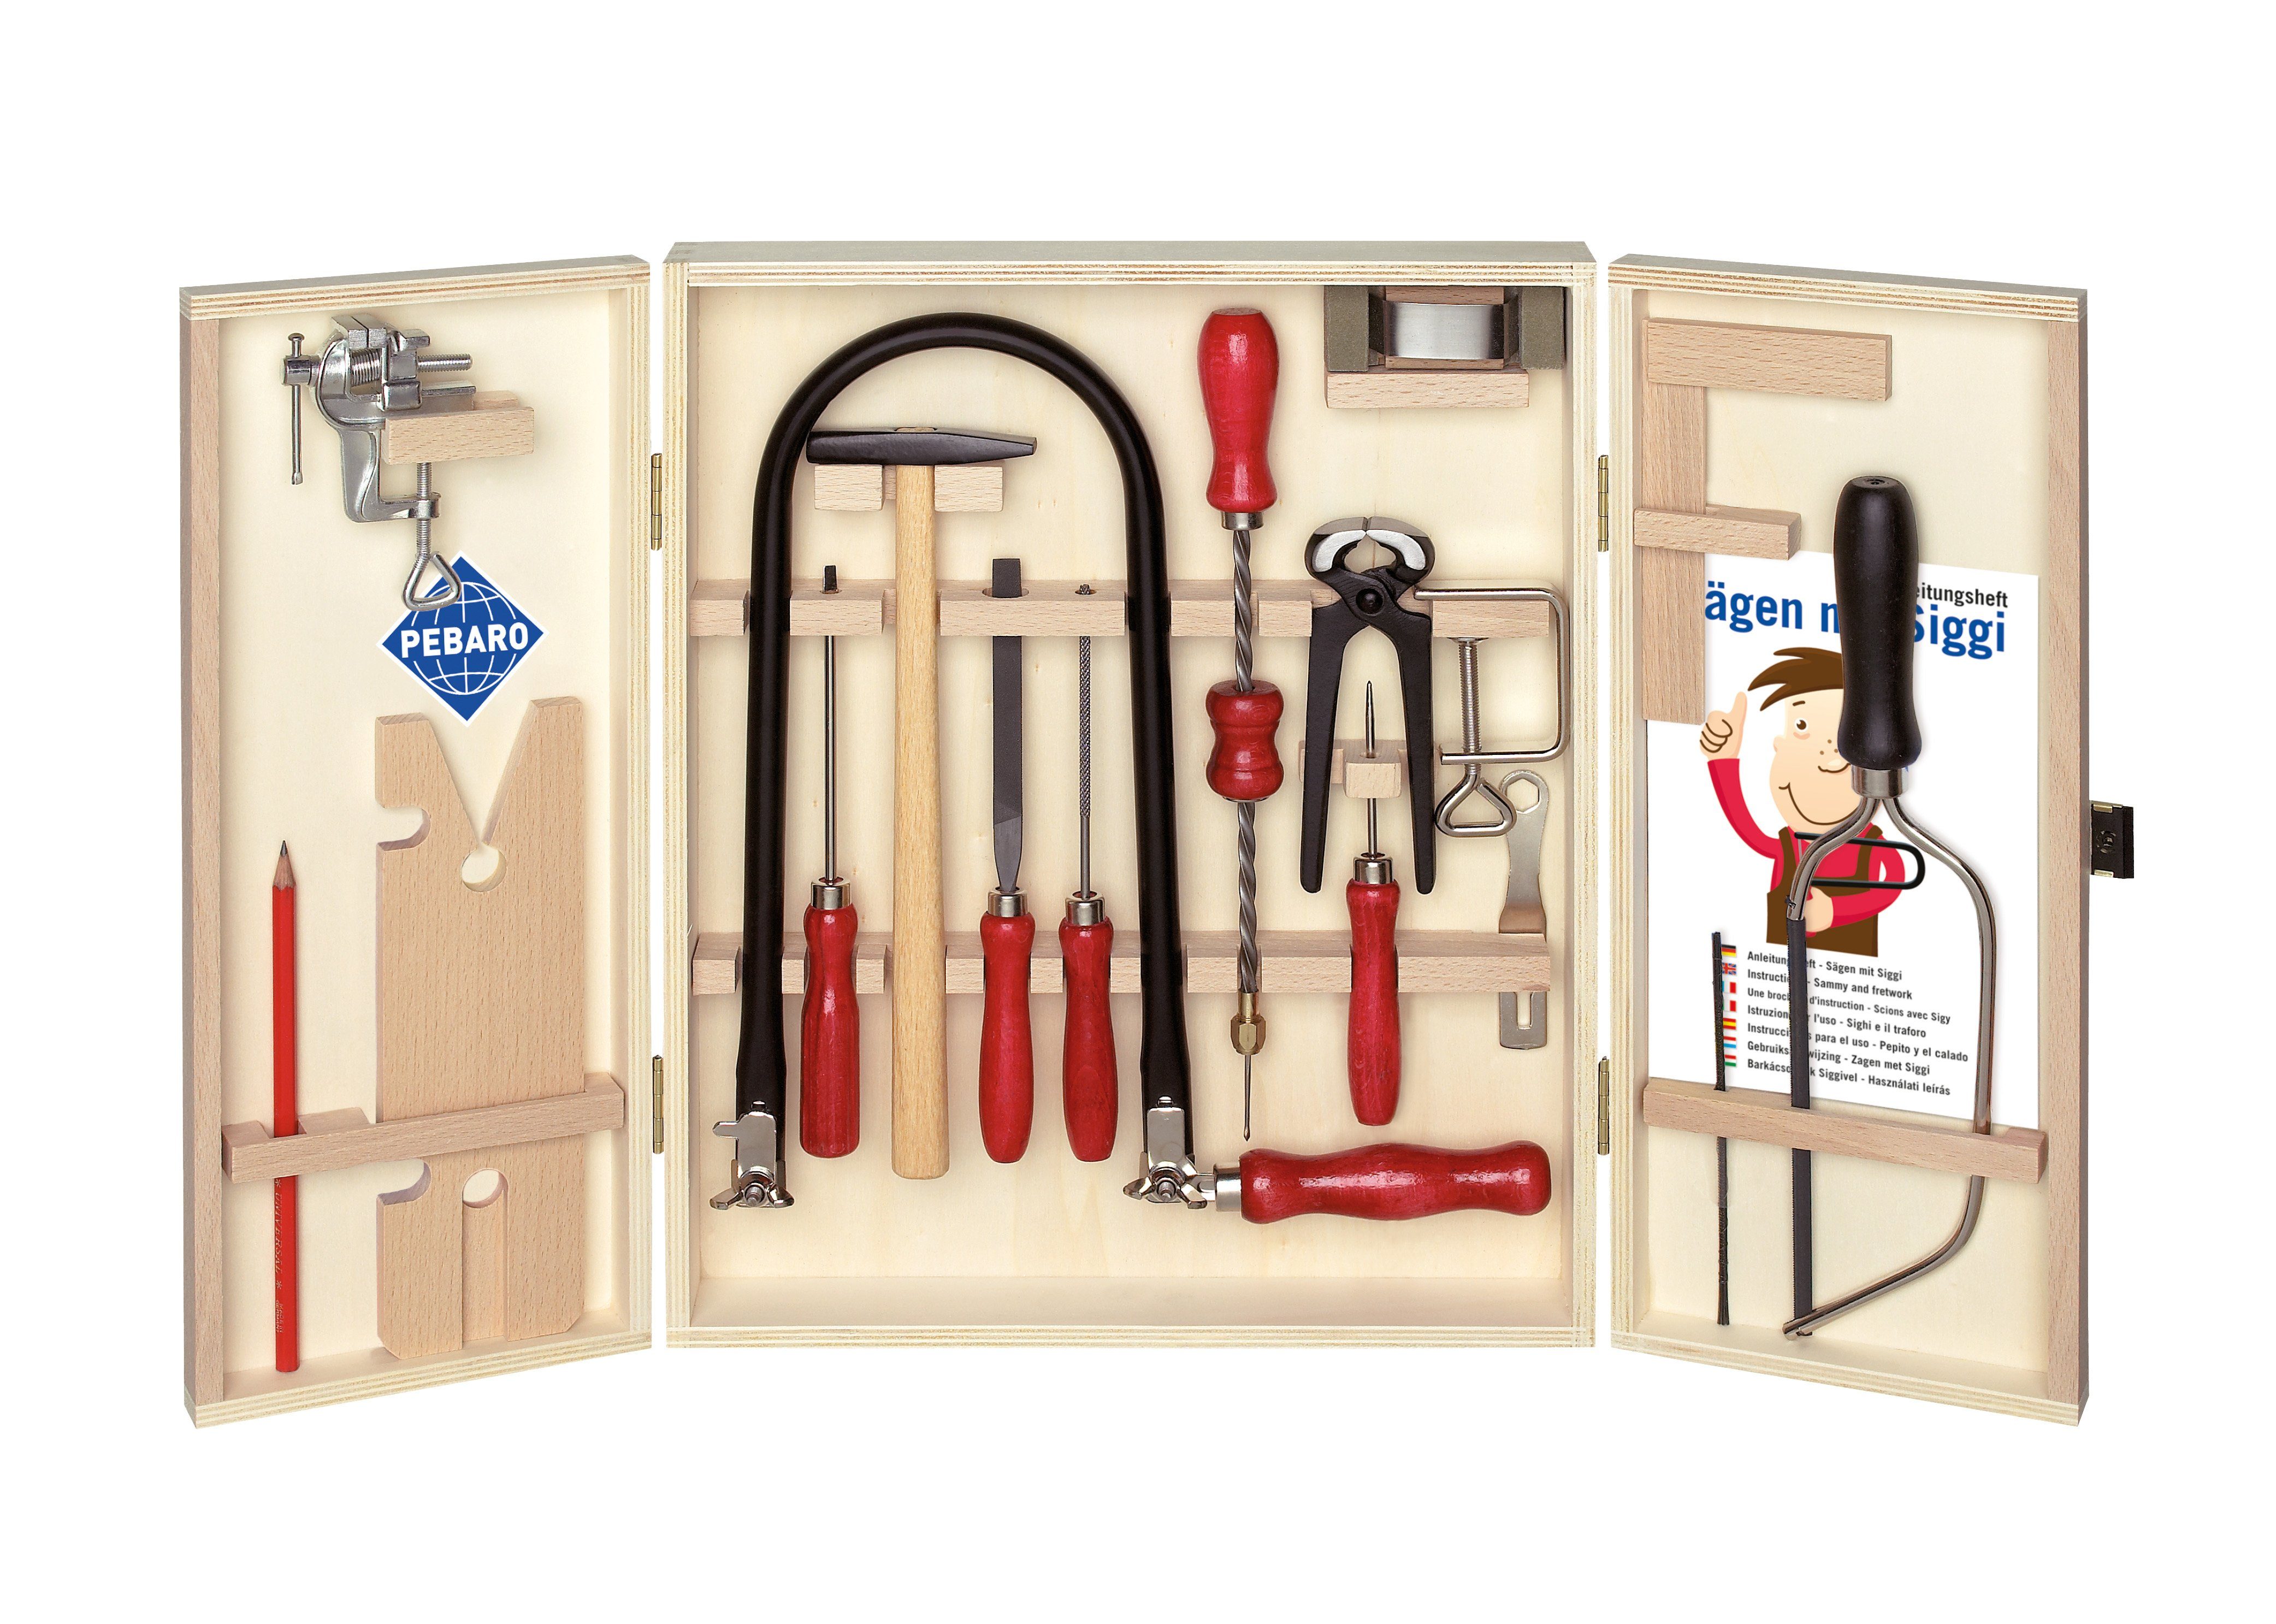 Pebaro Kinder-Werkzeug-Set Öko-Laubsägeschrank, 24 Teile, 401S